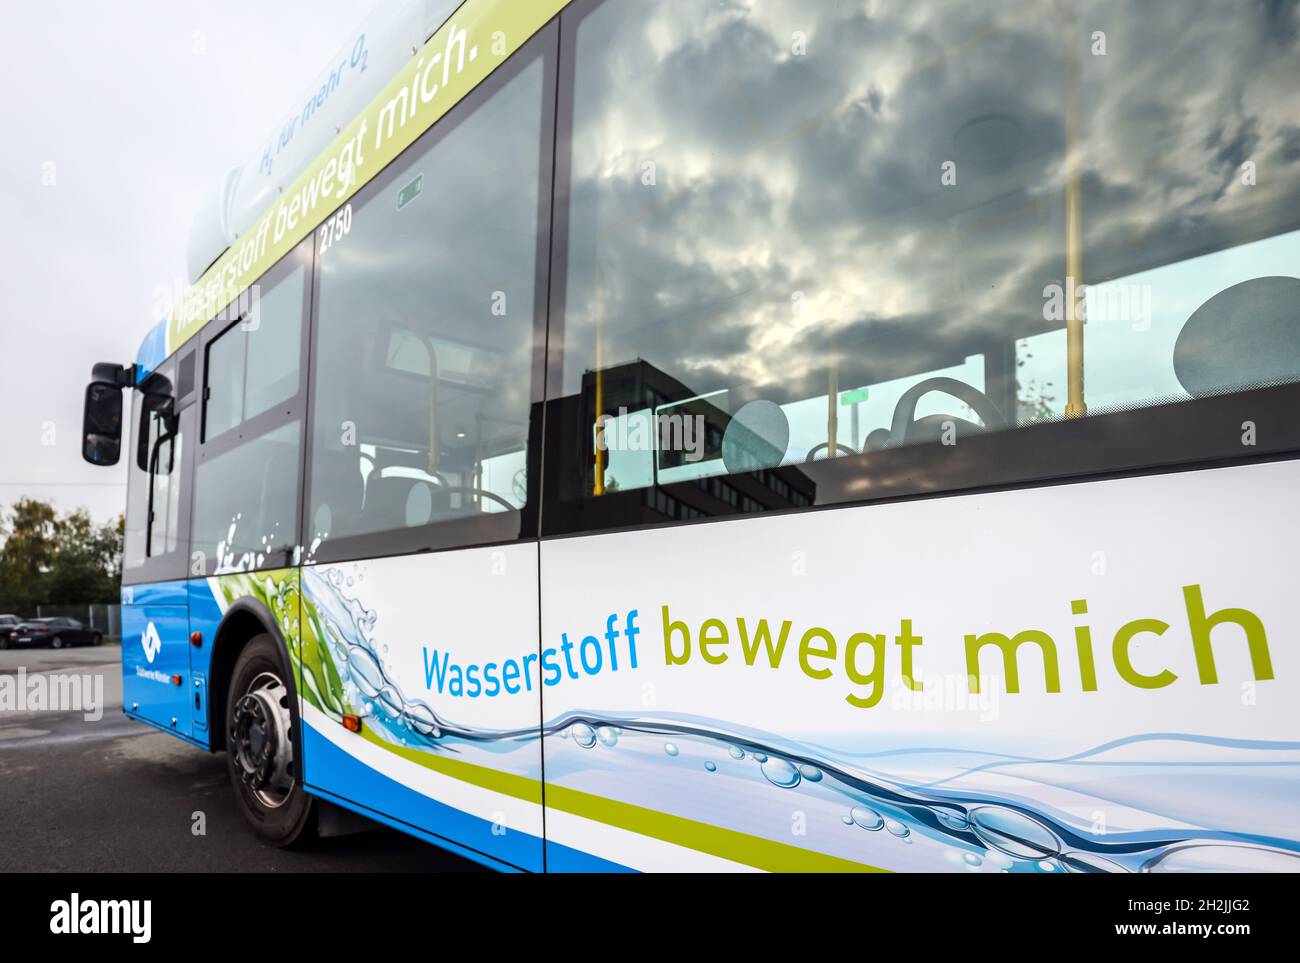 Muenster, North Rhine-Westphalia, Germany Hydrogen bus in regular service refuels H2 hydrogen at a mobile H2 hydrogen refueling station. Stock Photo